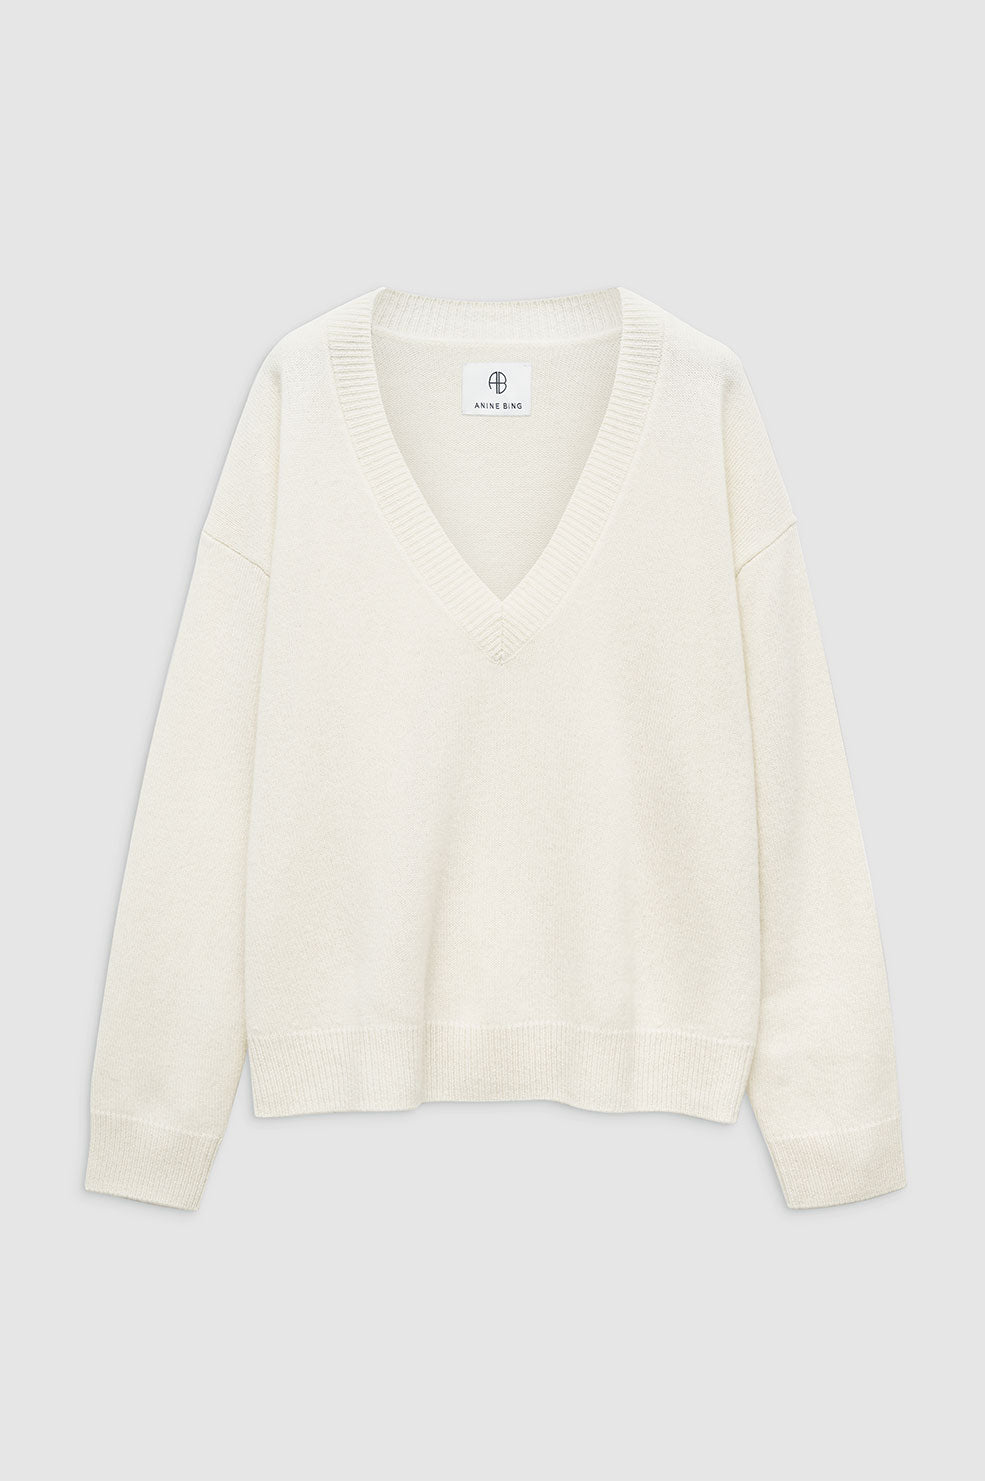 Anine Bing - Lee Sweater in Cream